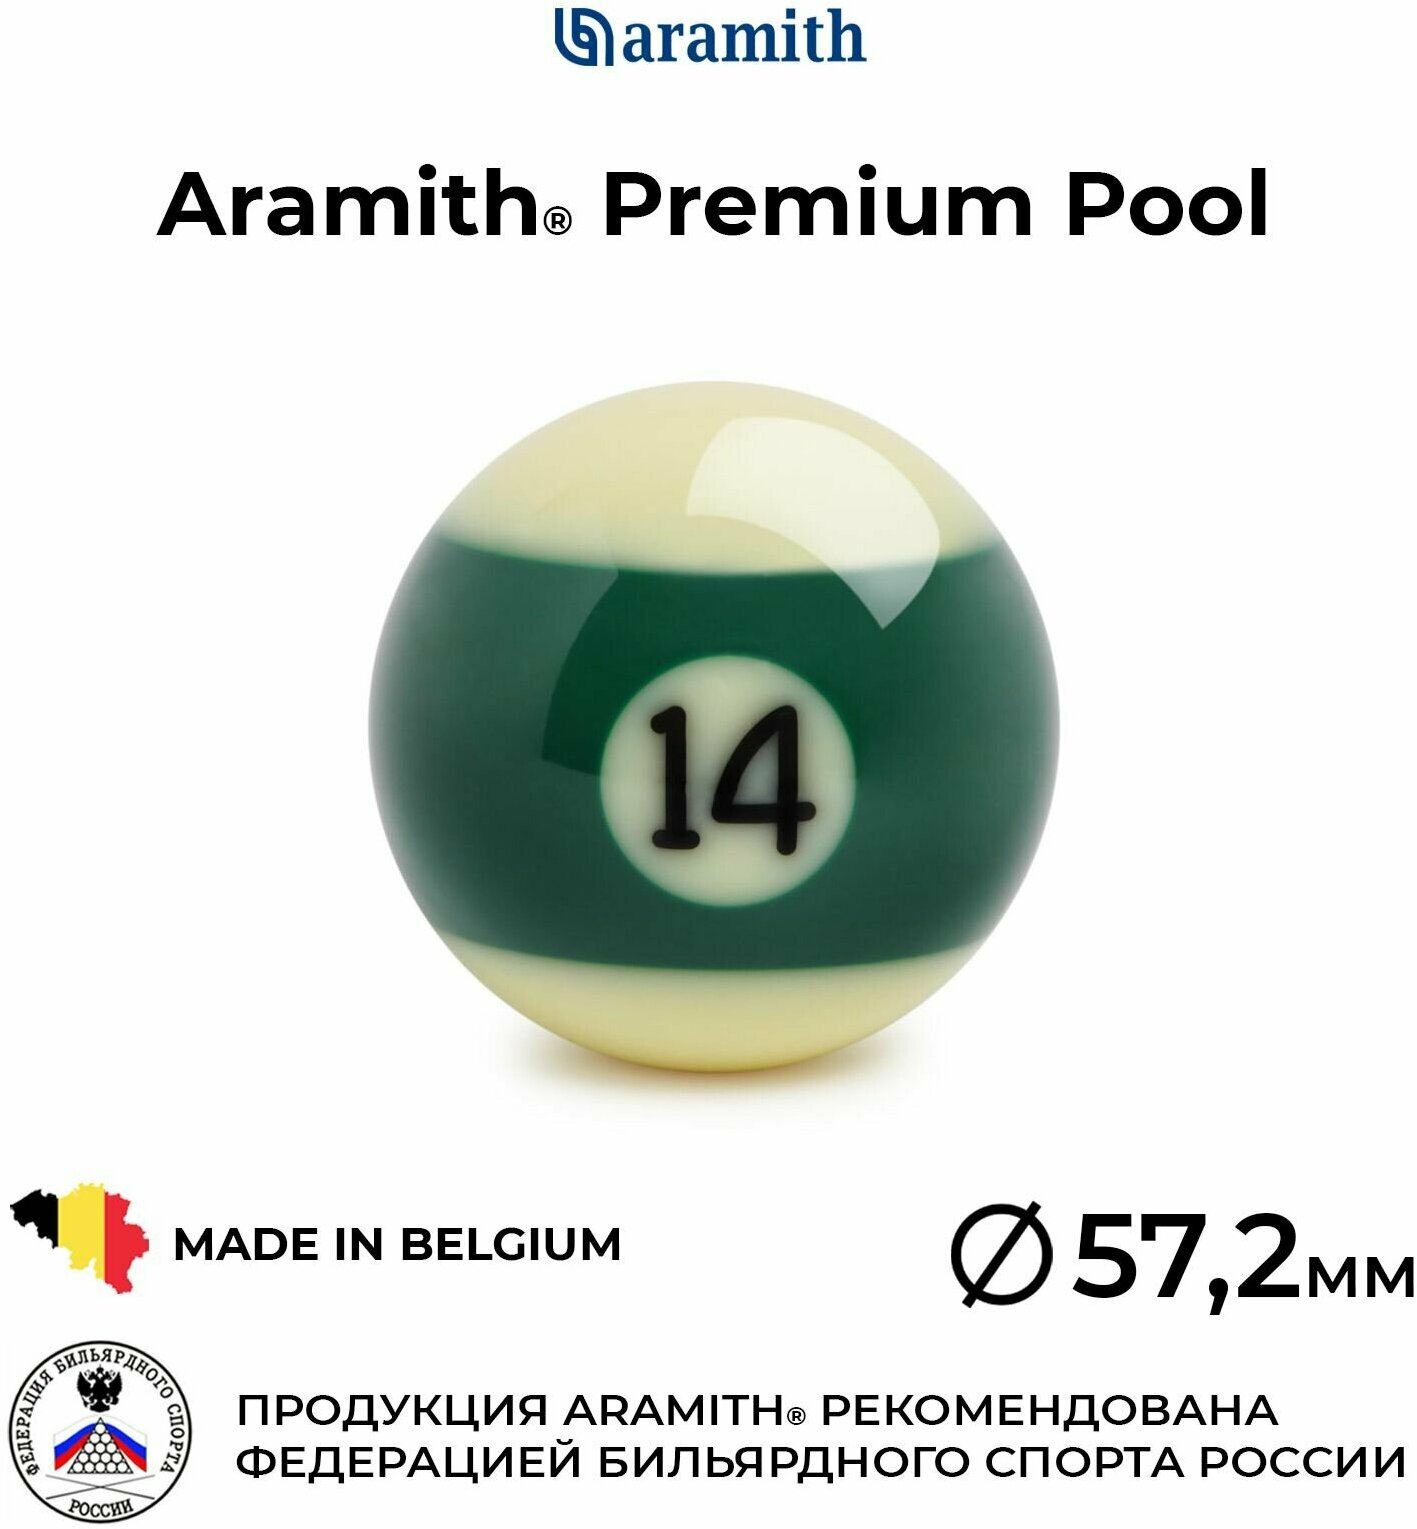 Бильярдный шар 57,2 мм Арамит Премиум Пул №14 / Aramith Premium Pool №14 57,2 мм зеленый 1 шт.